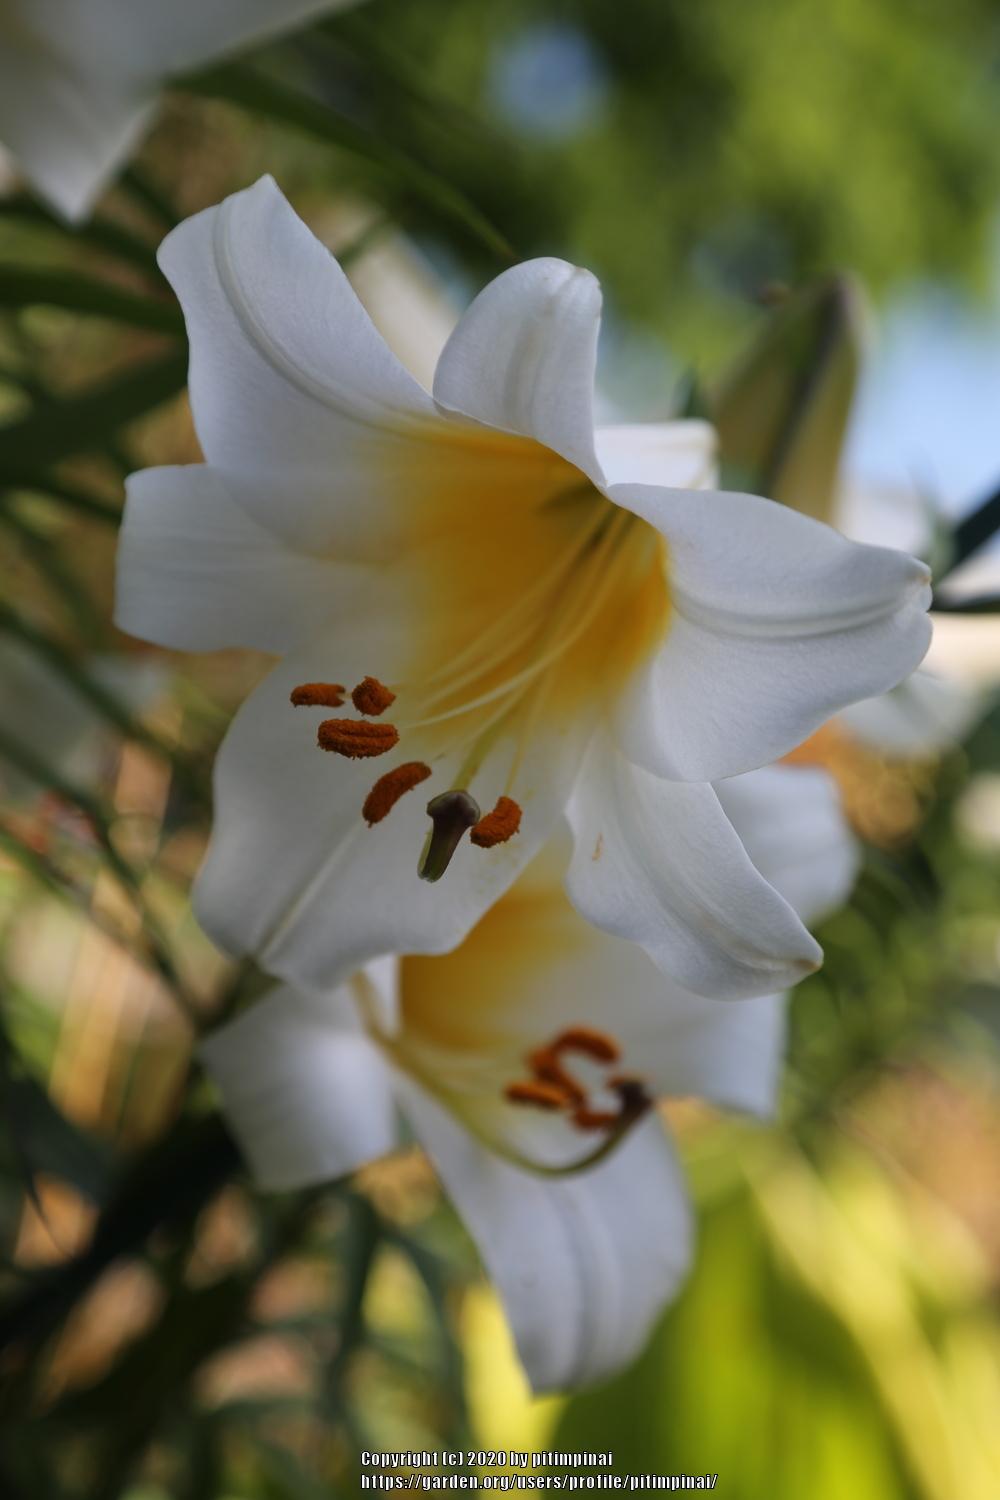 Photo of Lilies (Lilium) uploaded by pitimpinai